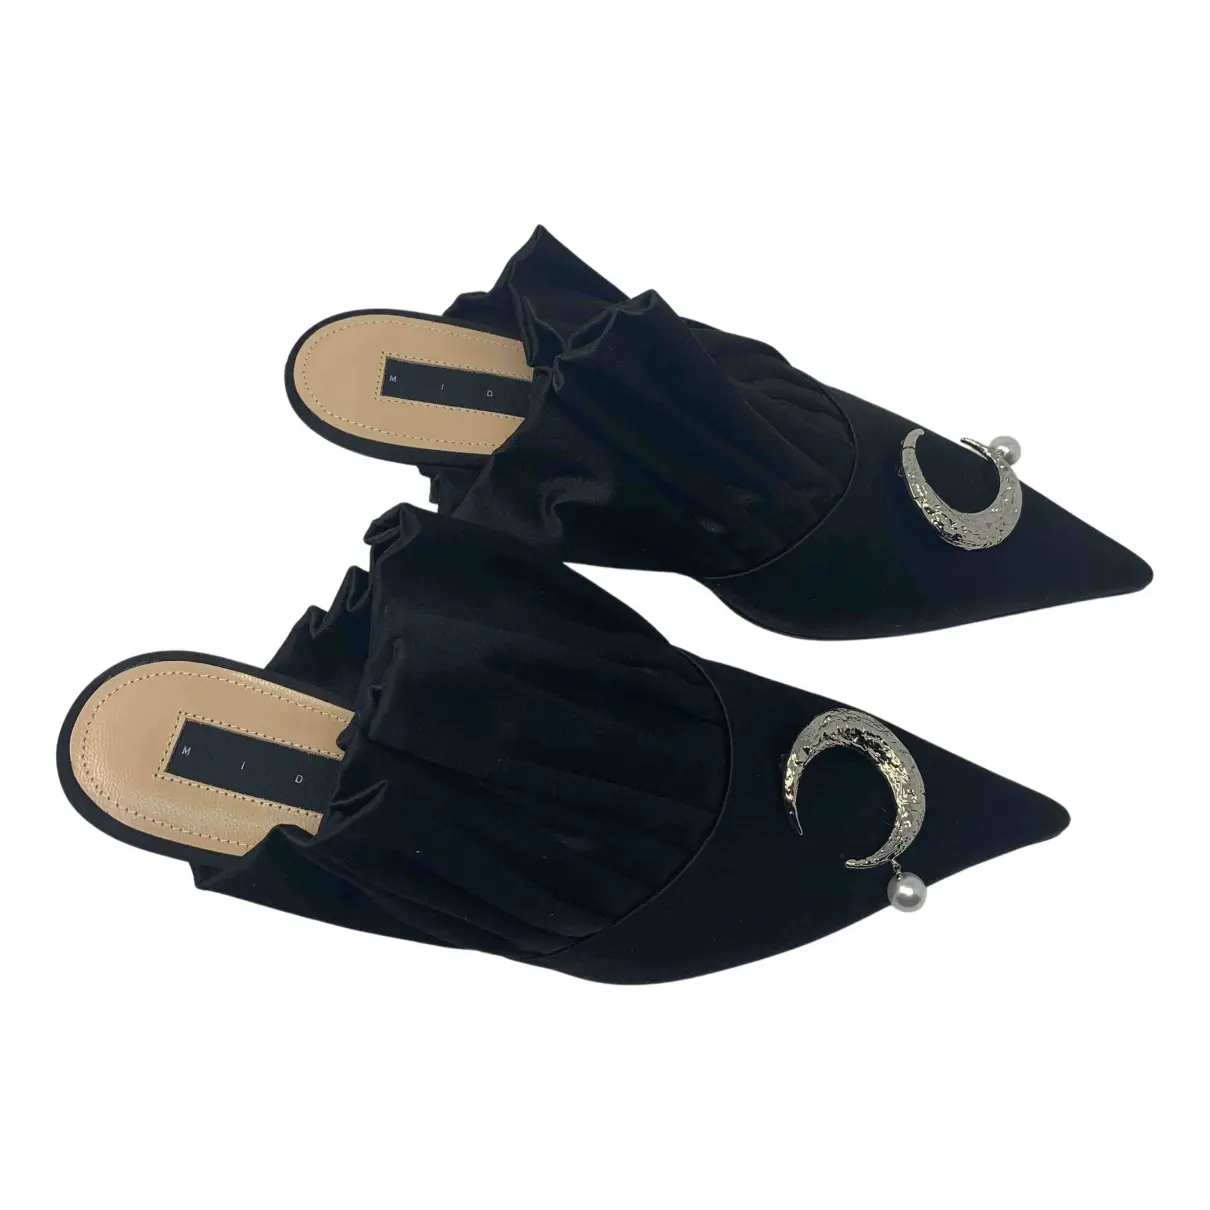 Buy Midnight 00 Cloth sandals online